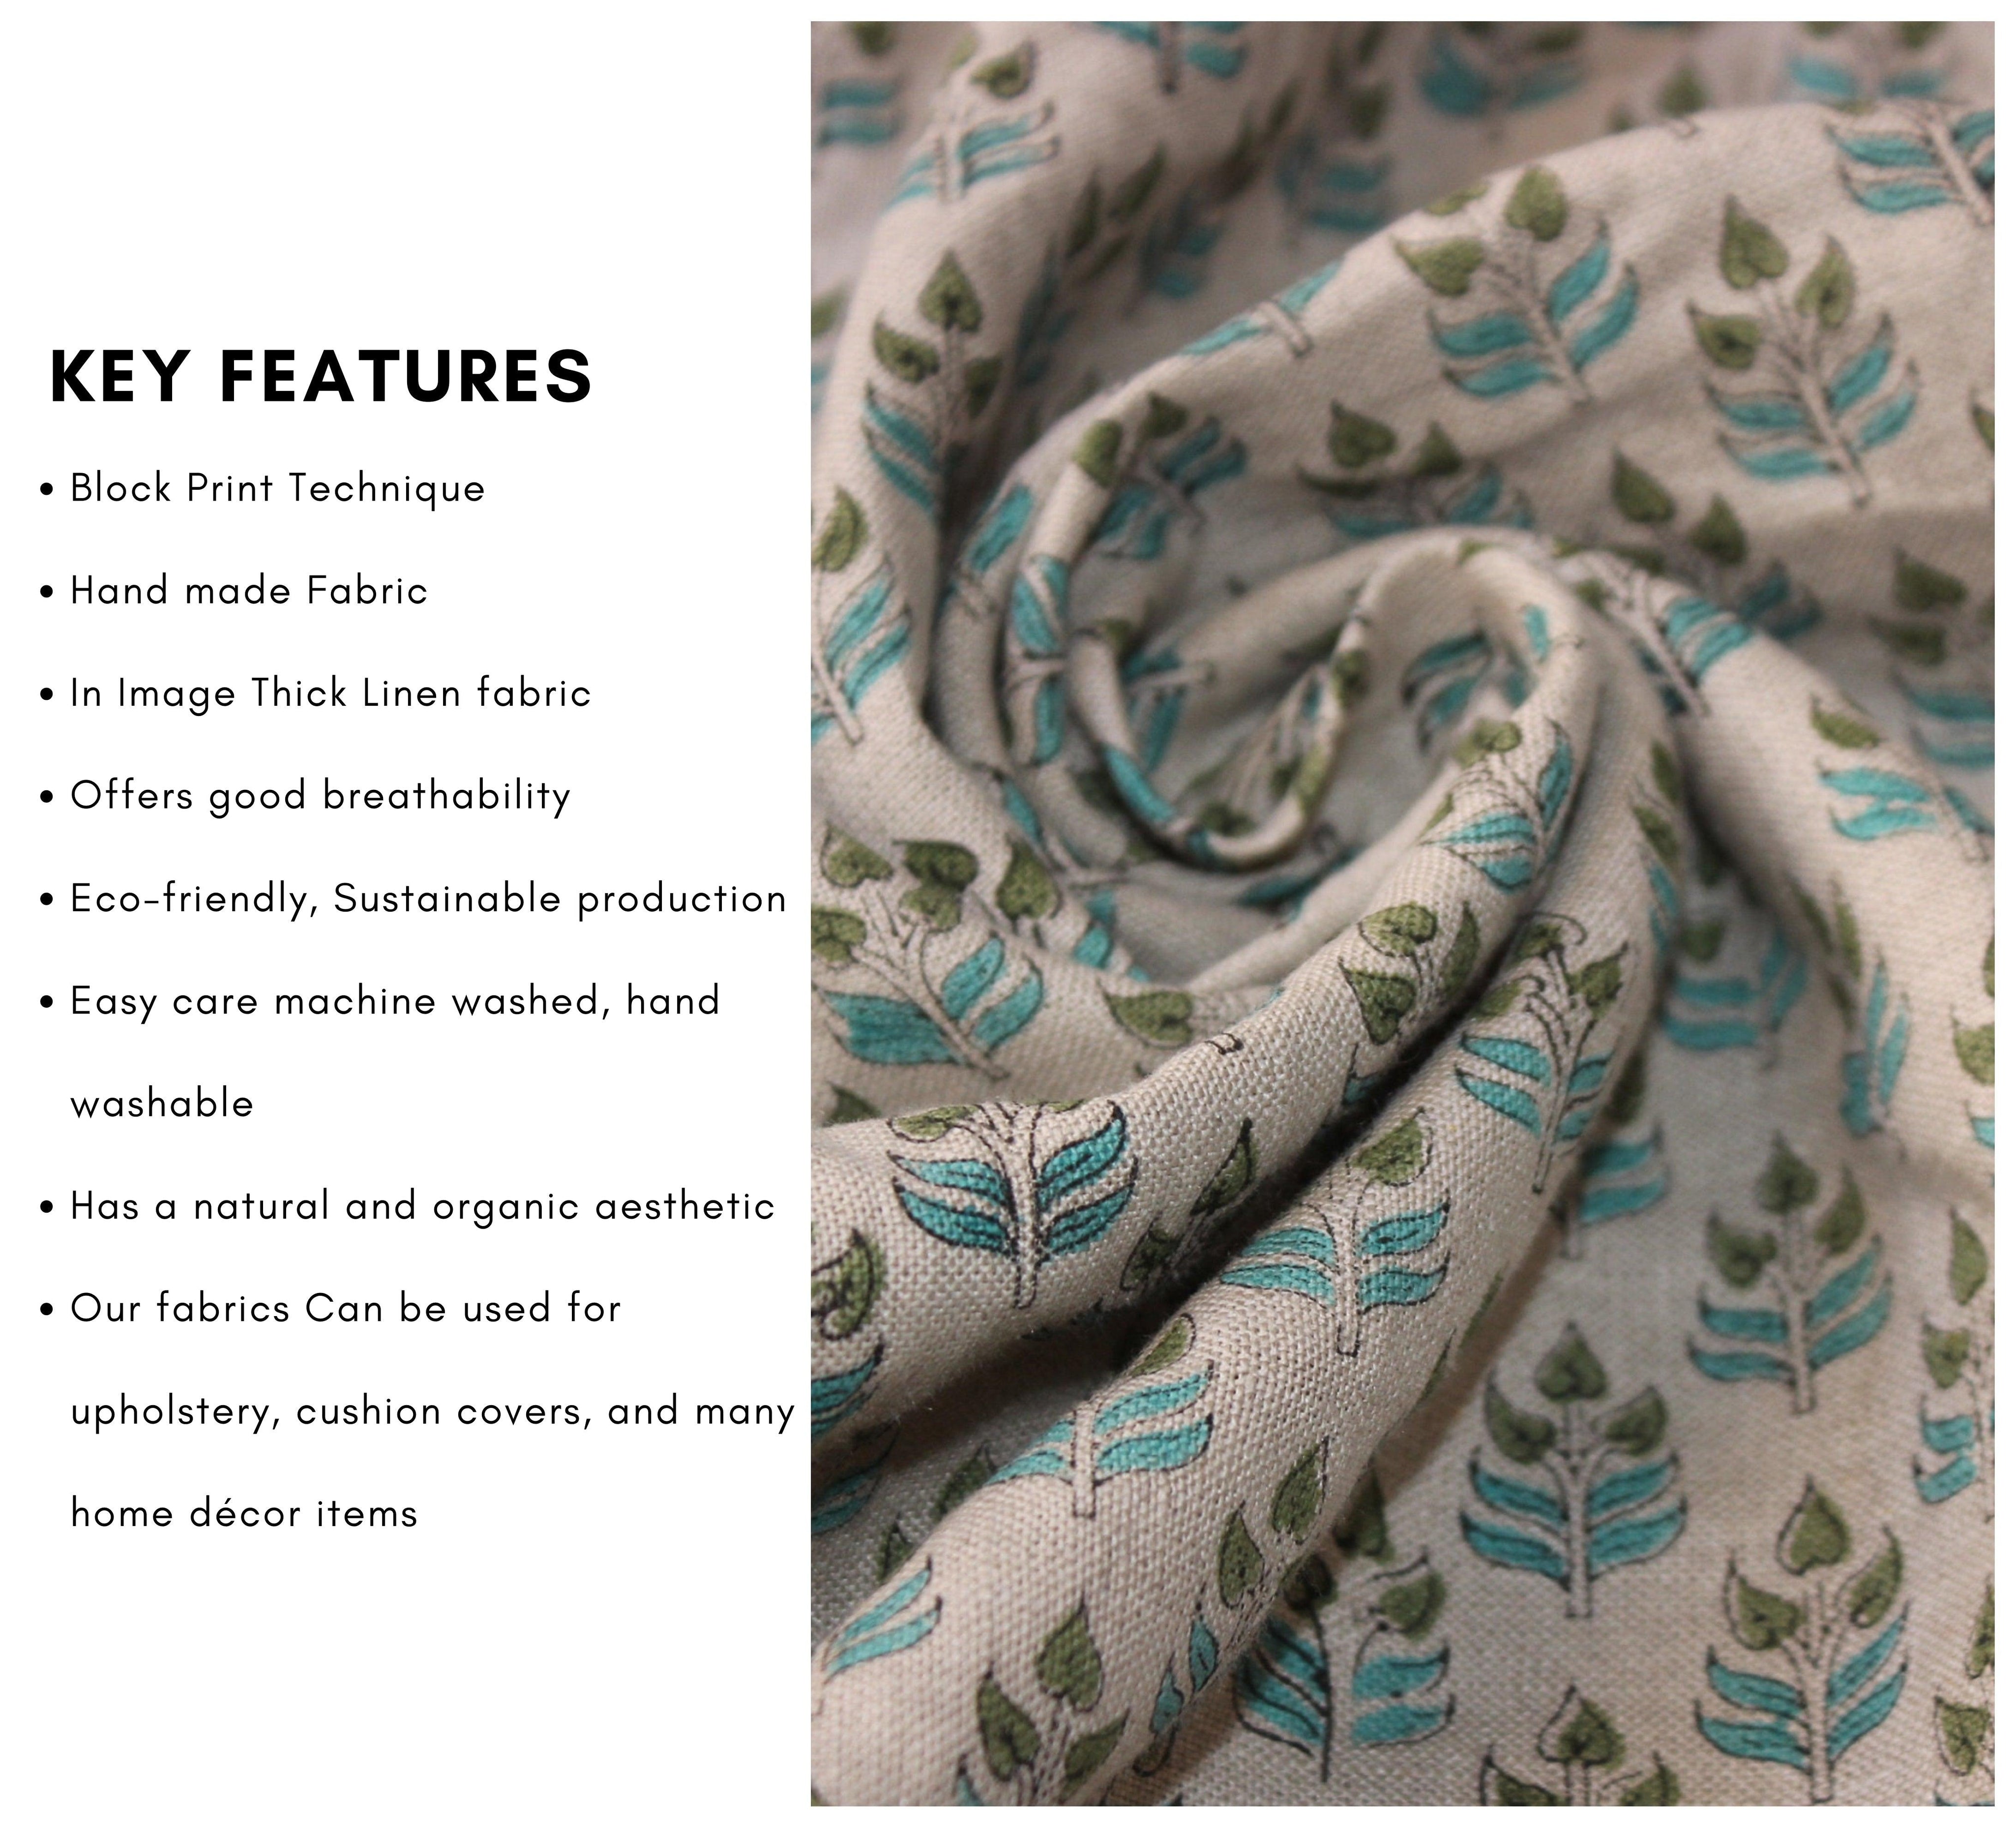 Alia Green  Linen Home Decor, Indian Hand Block Print Linen Fabric, Extra Wide Linen, Linen For Upholstery Works, Linen Curtains. 